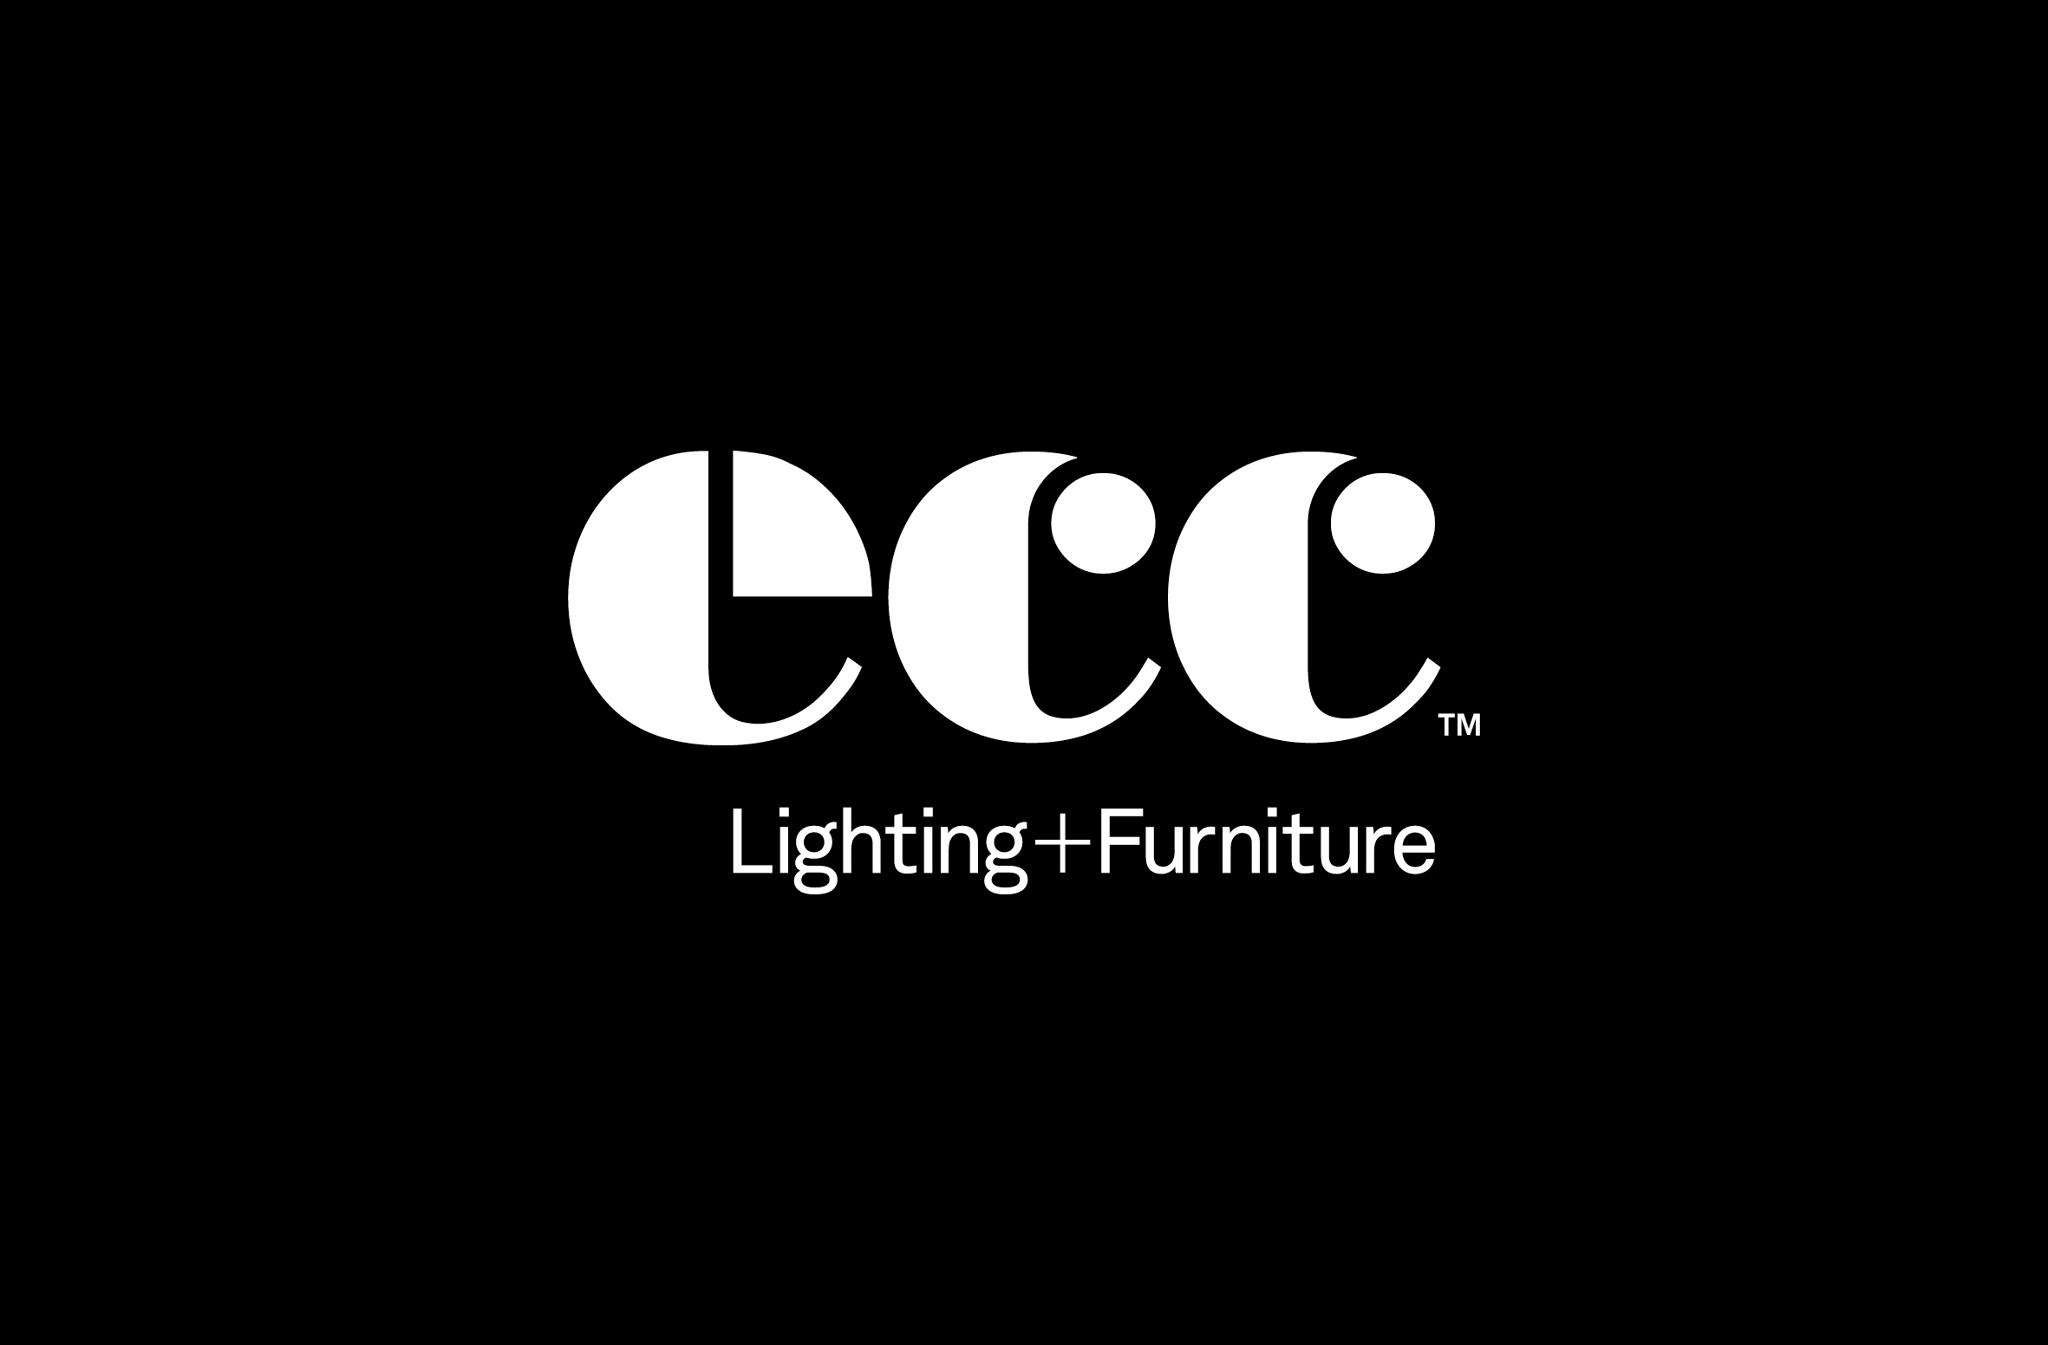 ECC Lighting – The Marketplace